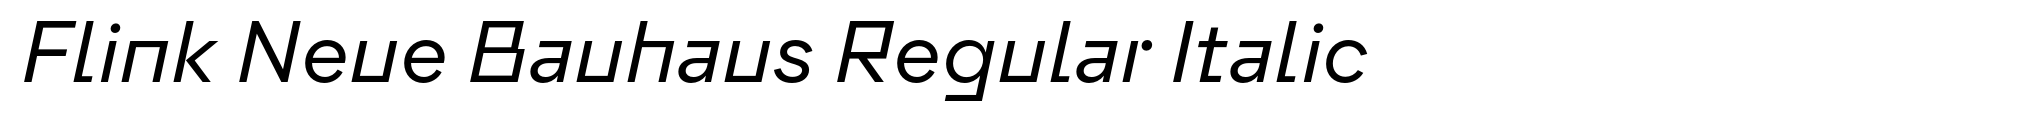 Flink Neue Bauhaus Regular Italic image